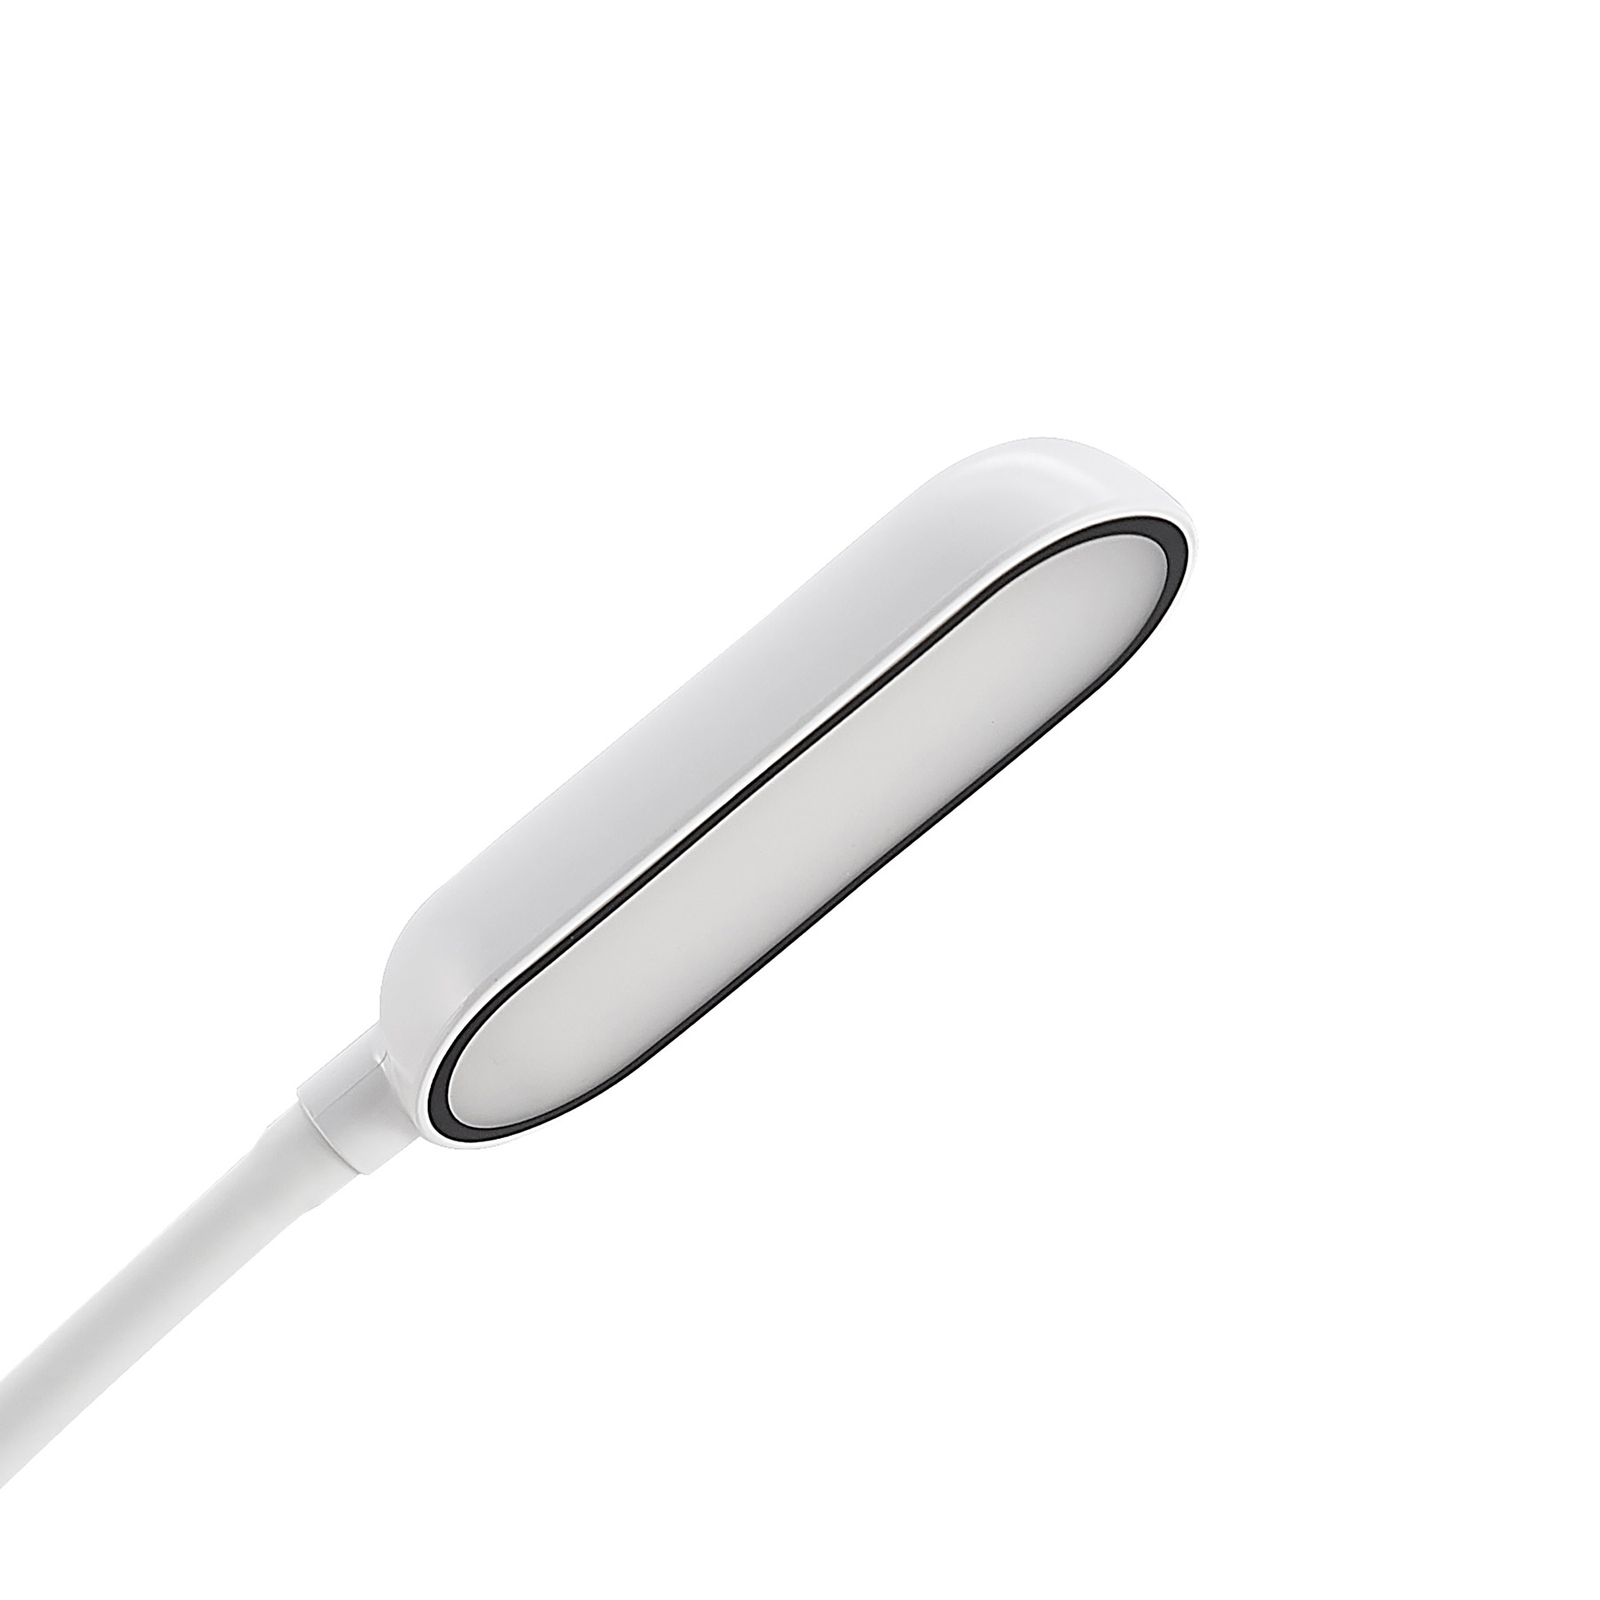 Prios LED klämlampa Najari, vit, laddningsbart batteri, USB, 51 cm hög